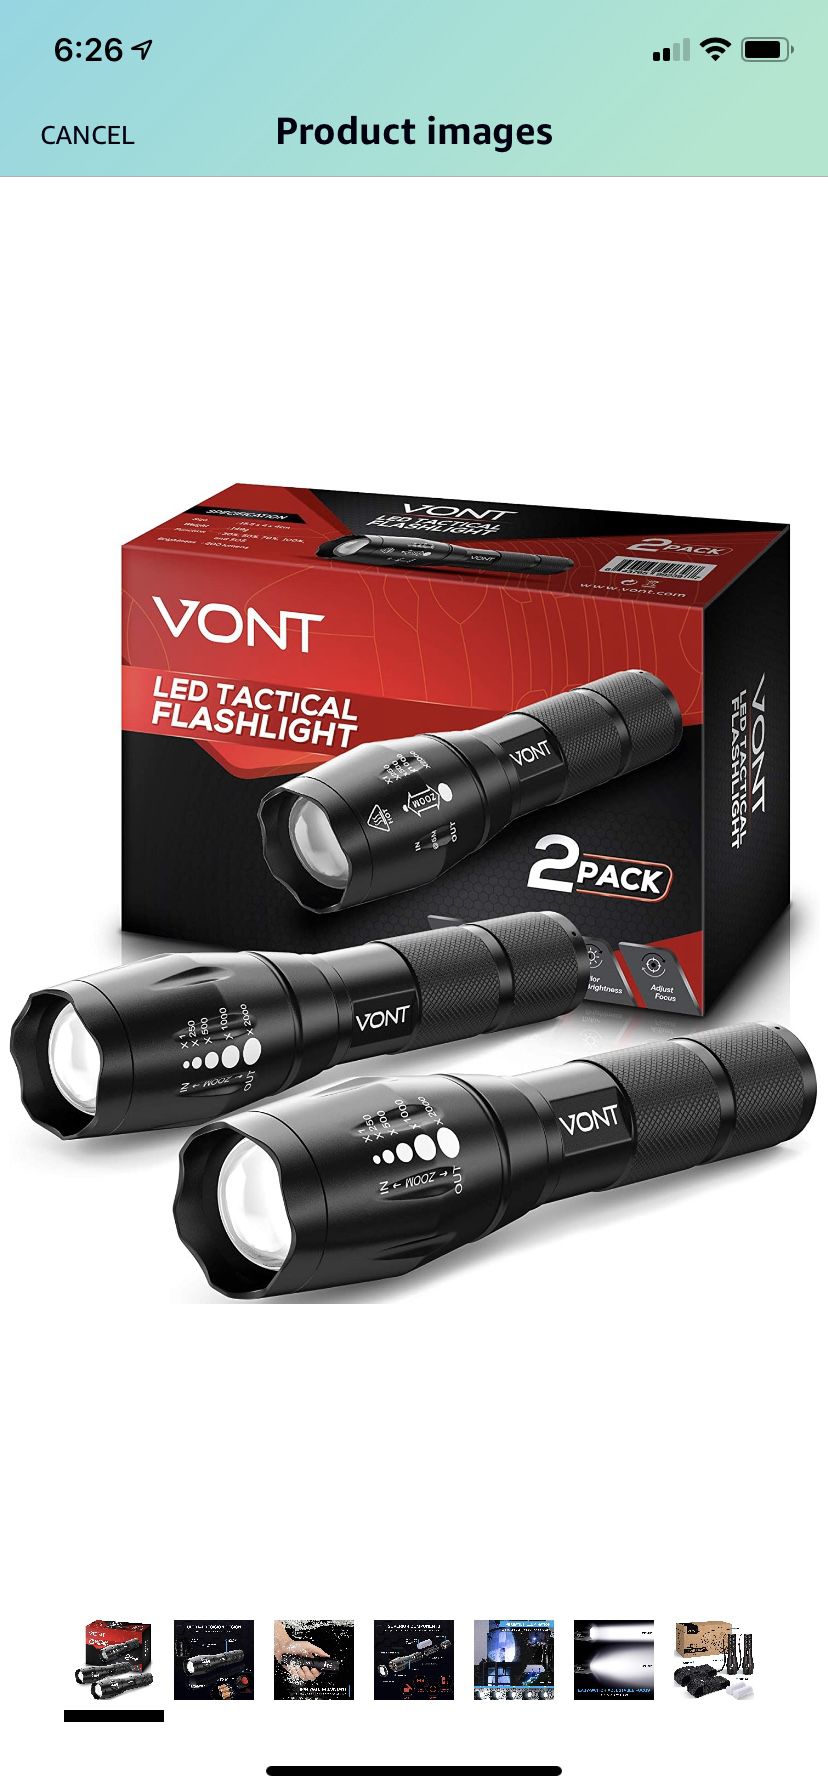 2 -LED tactical flashlights - BRAND NEW